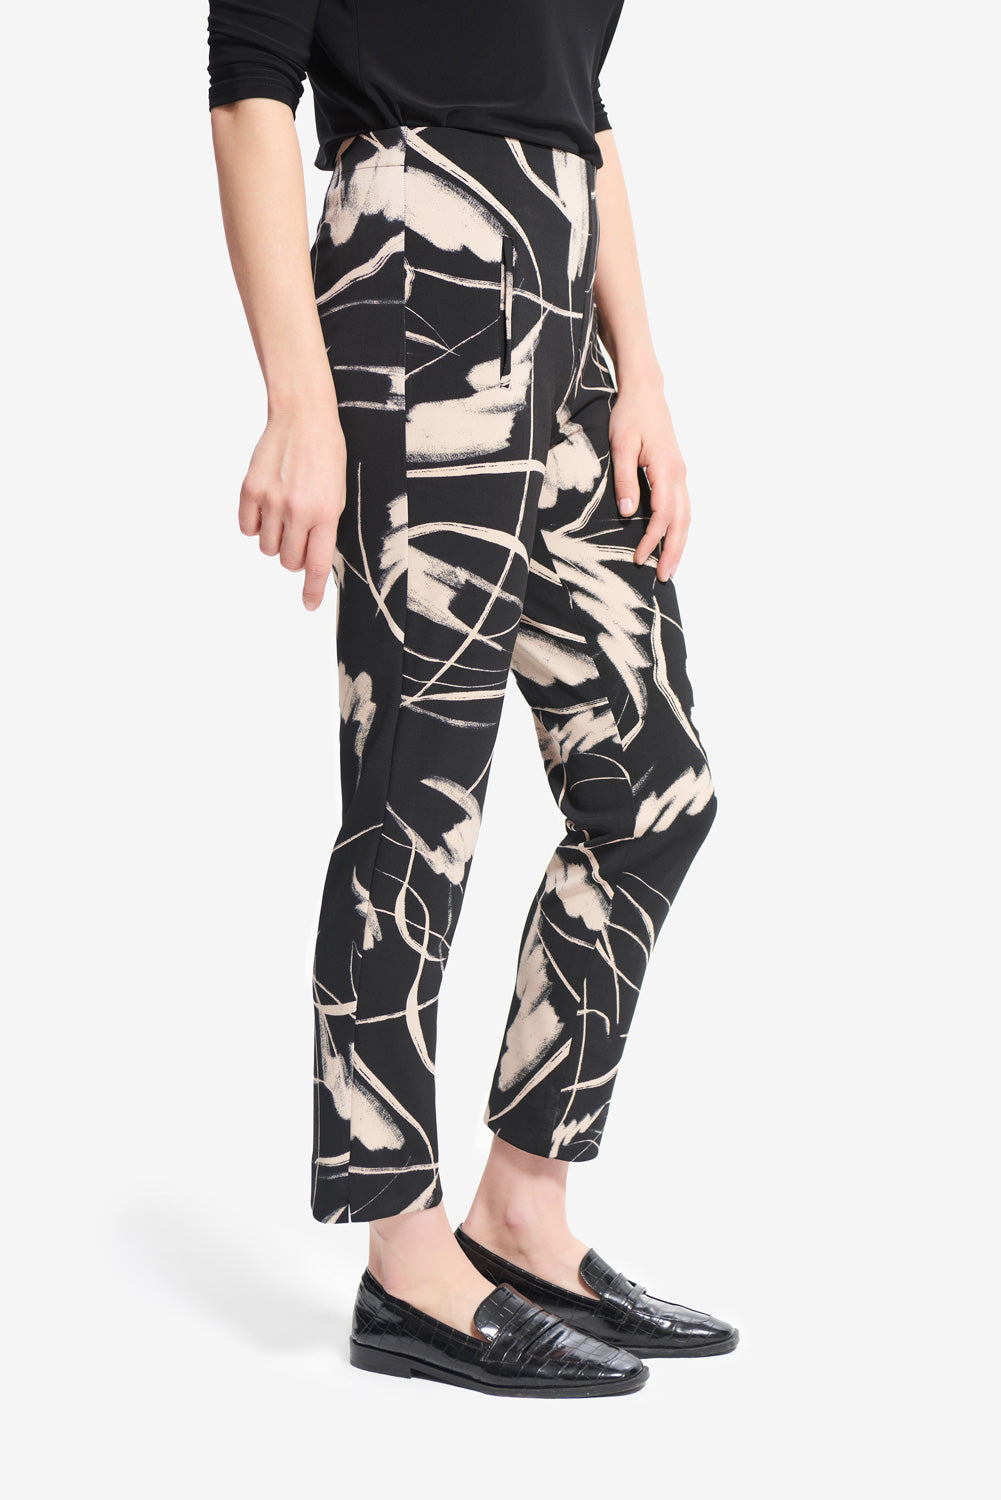 Joseph Ribkoff Black-Sand Cropped Printed Pants  Style 214278